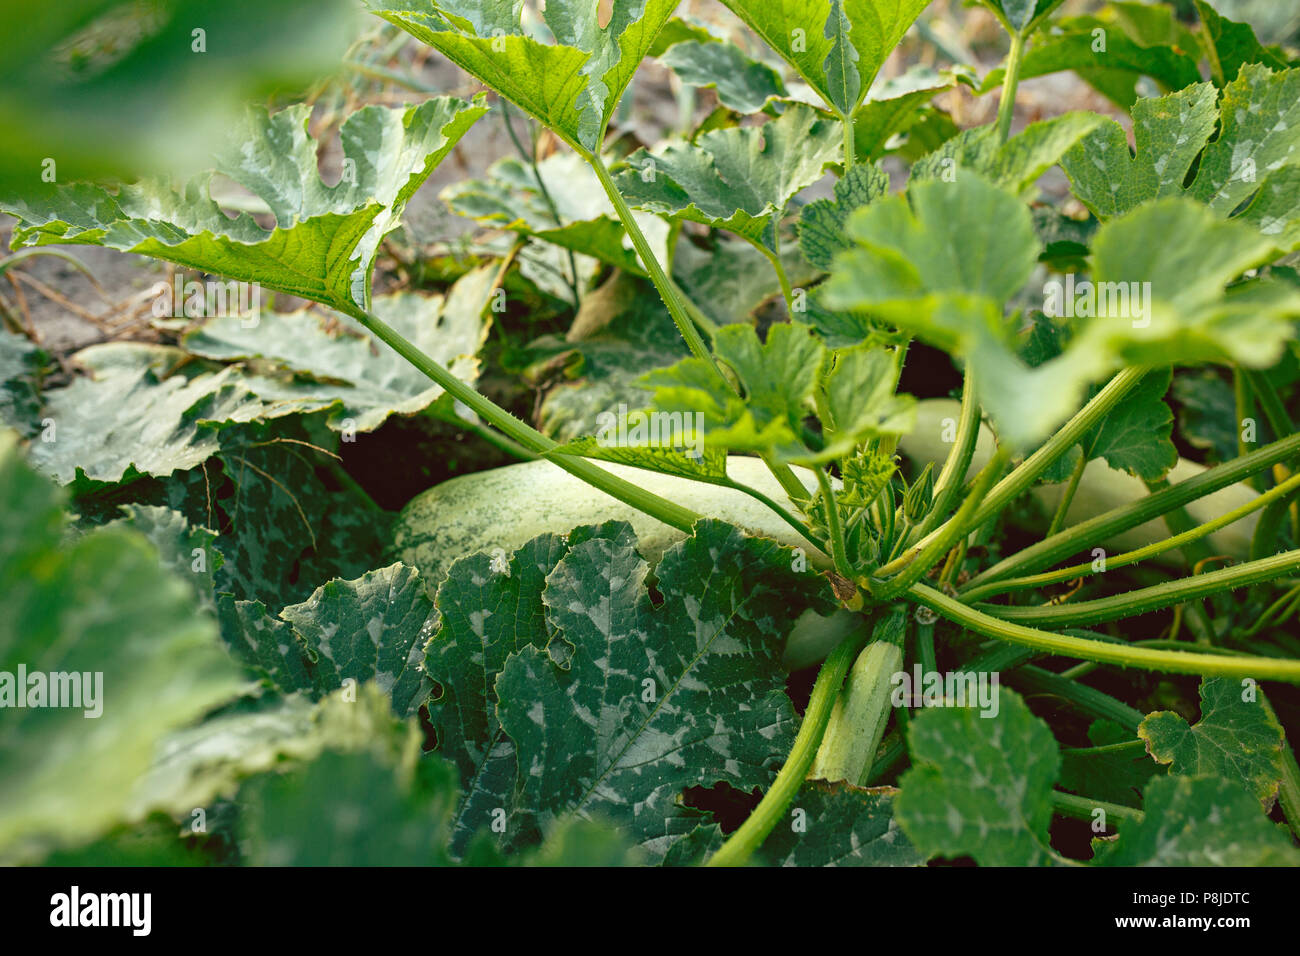 Zucchini plant. Zucchini flower. Green vegetable marrow growing on bush Stock Photo